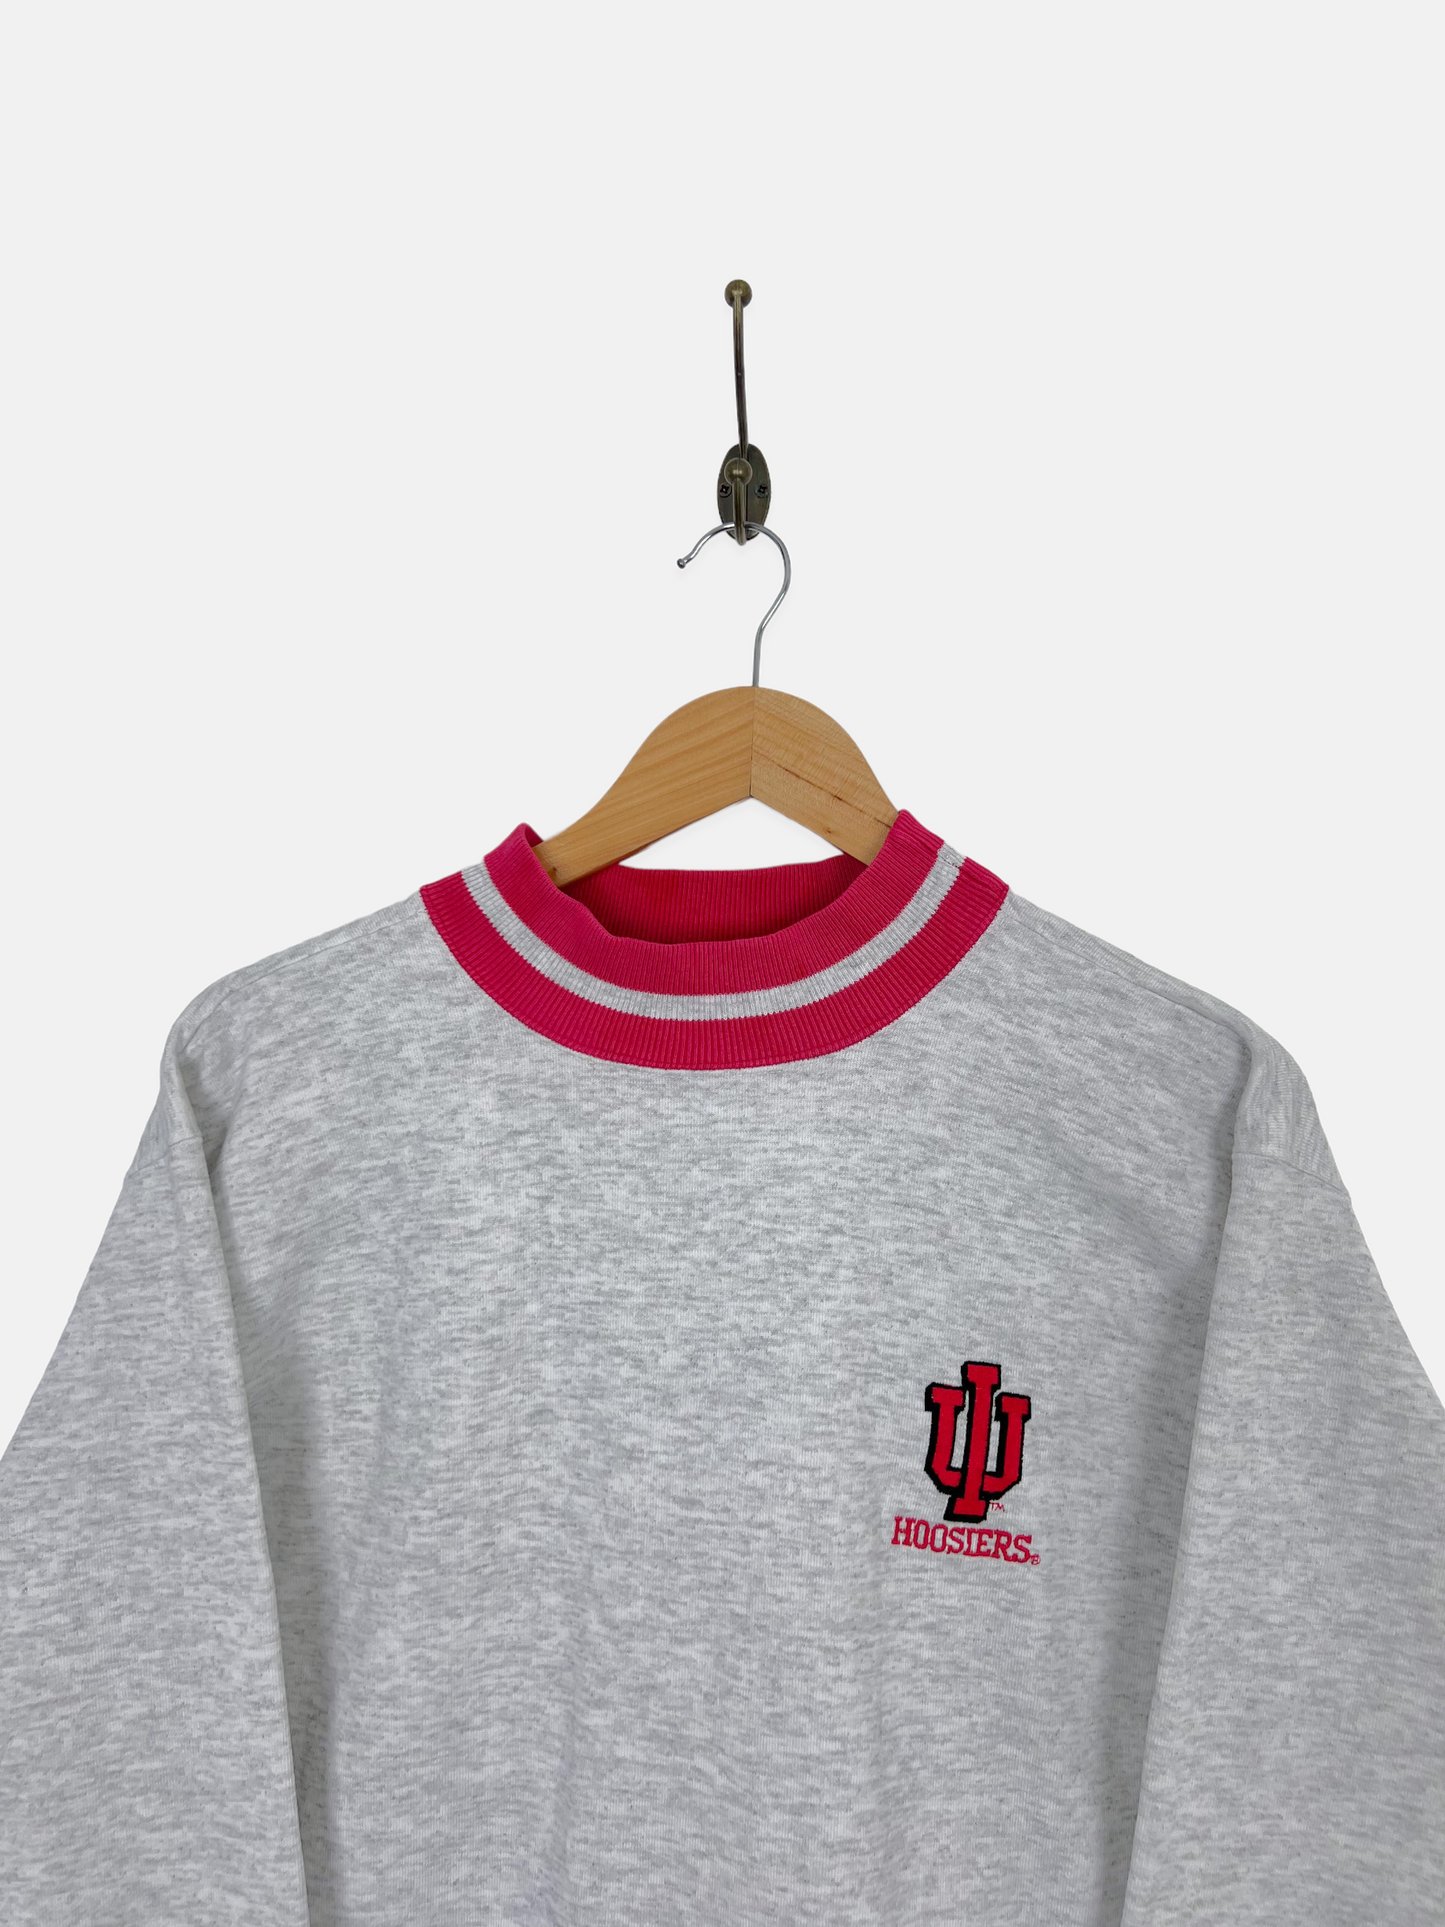 90's Indiana University USA Made Embroidered Vintage Sweatshirt Size 6-8